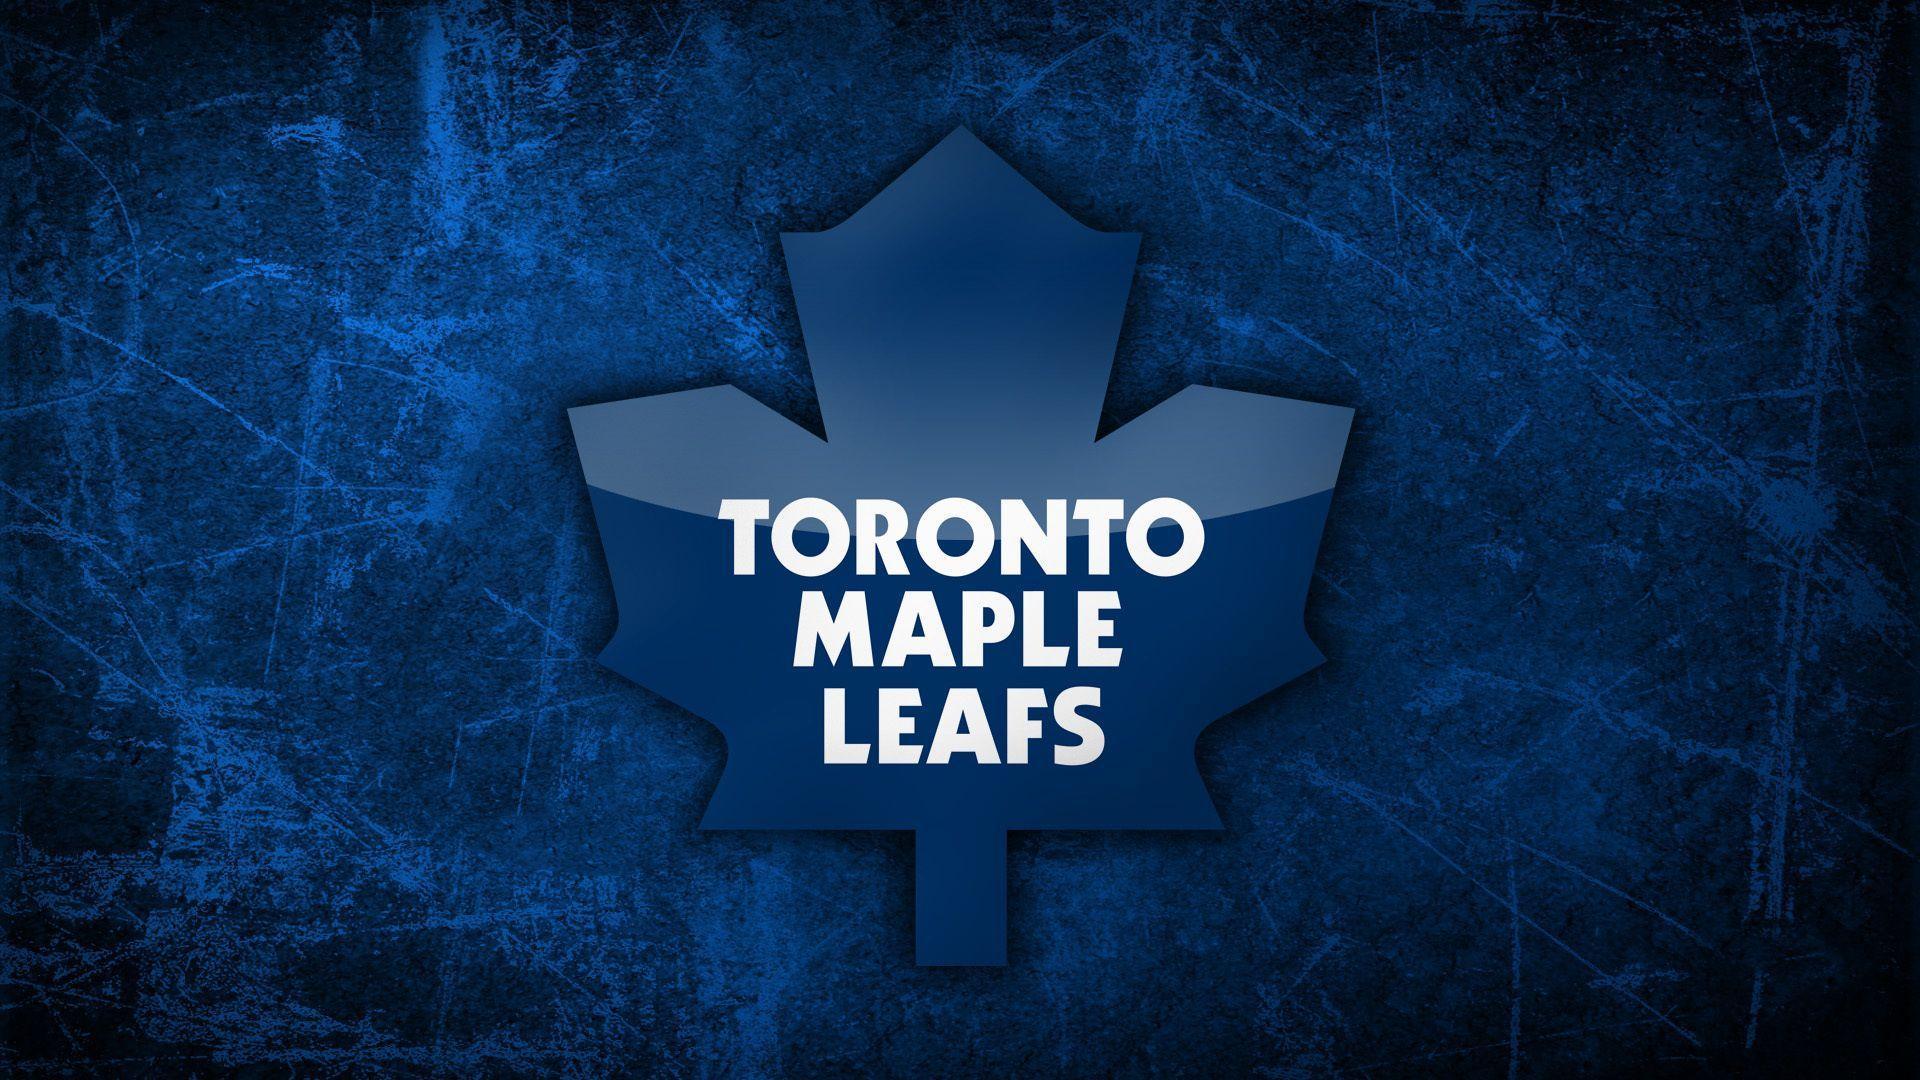 Toronto Maple Leafs Wallpaper (Picture)